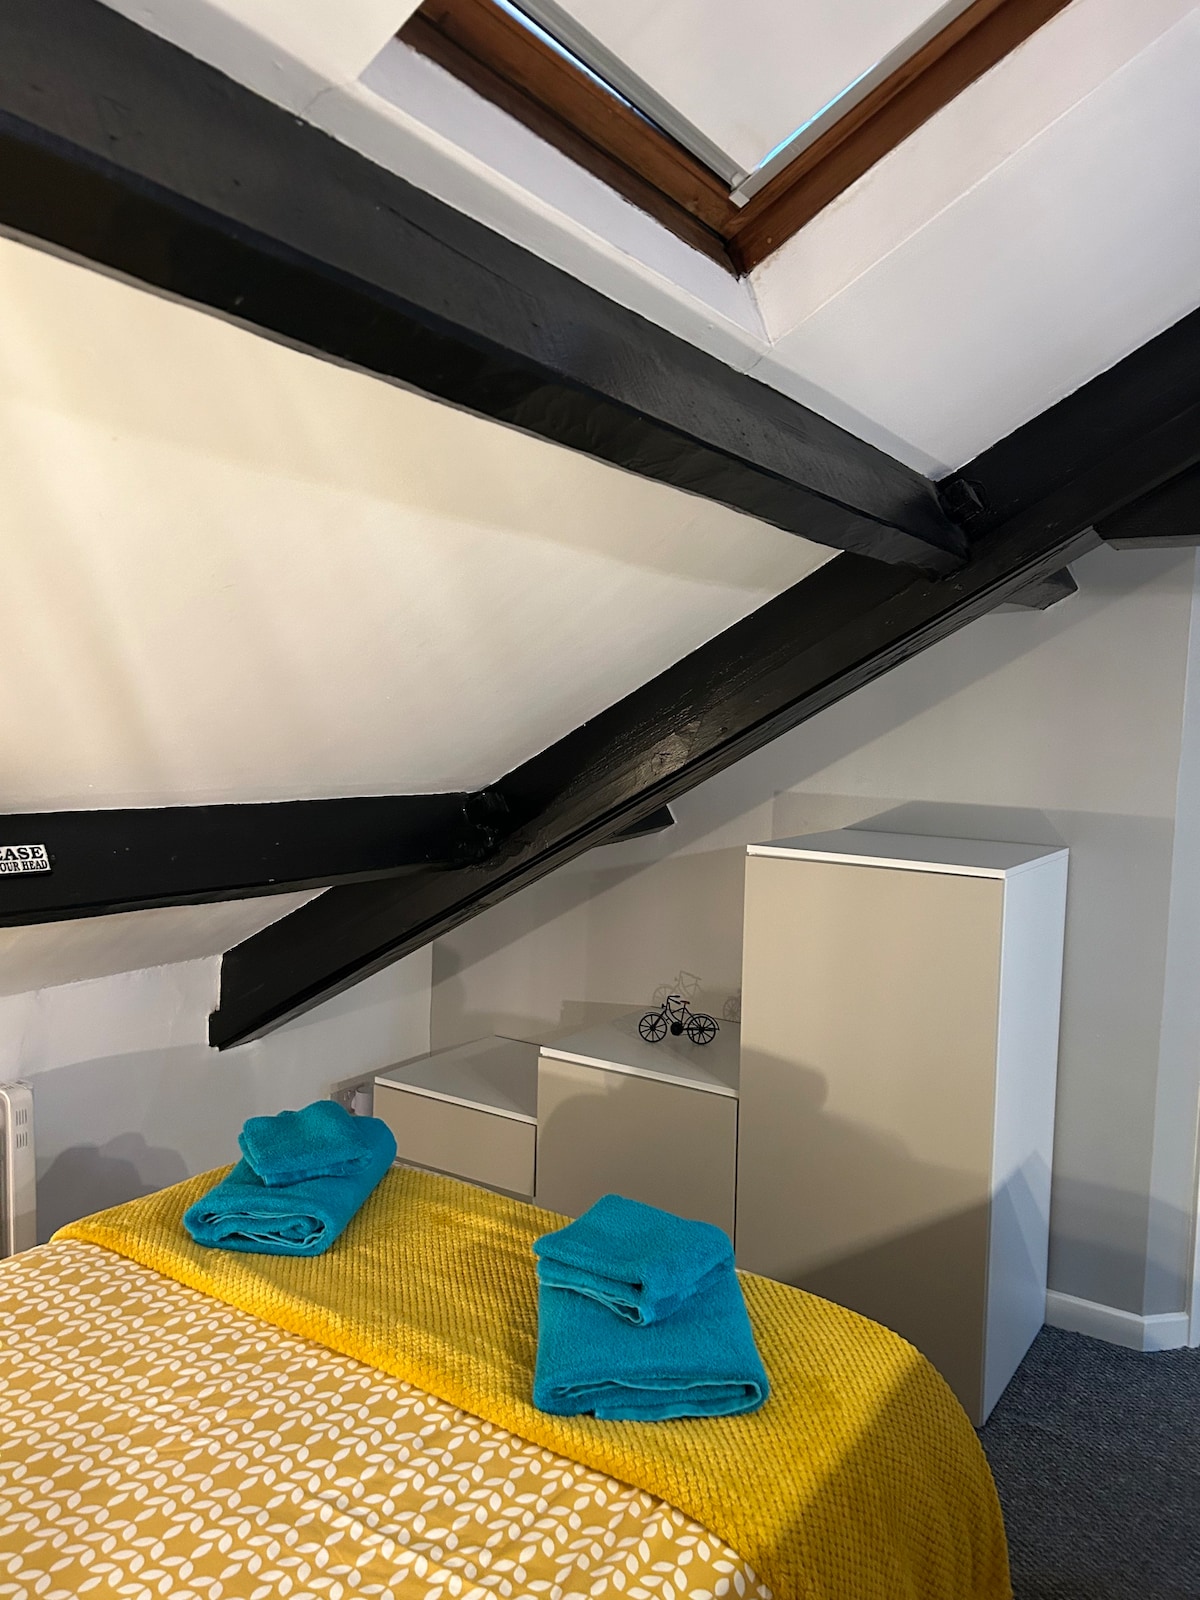 Modern 1 bedroom loft in West Cumbria